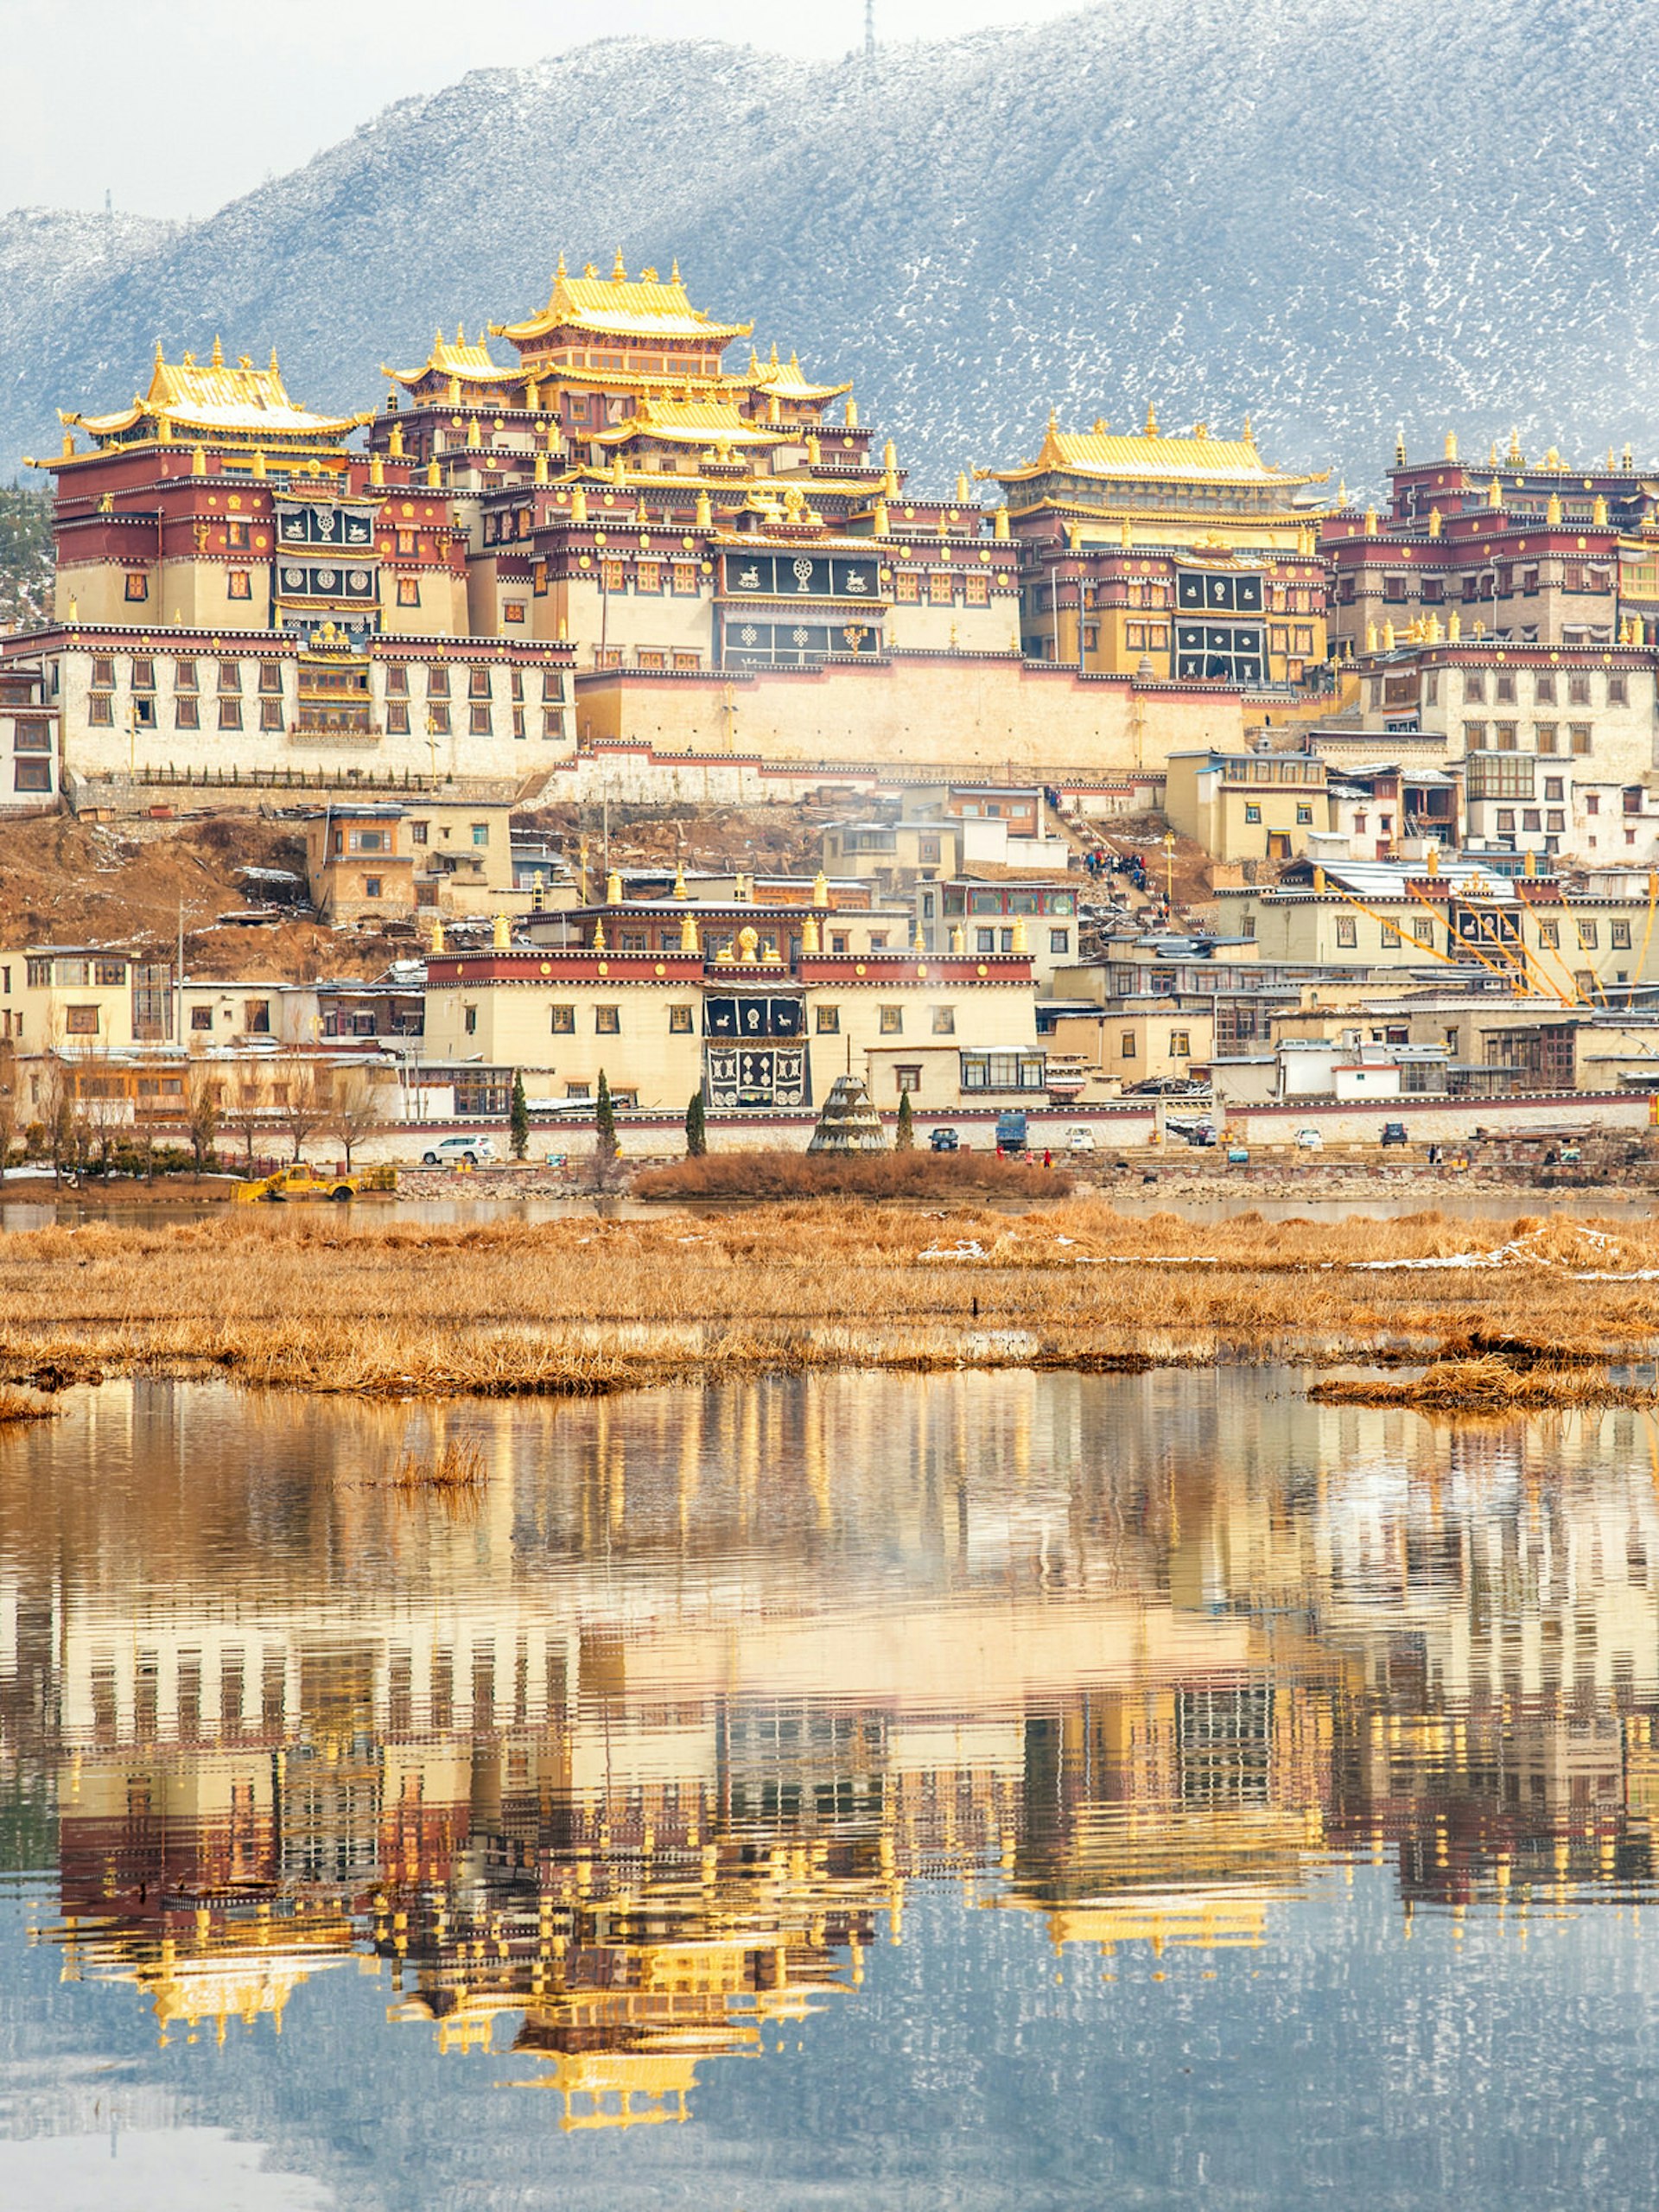 Shangri-la: home to Ganden Sumtseling Gompa, a 300-year-old Tibetan monastery © Suttipong Sutiratanachai / Getty